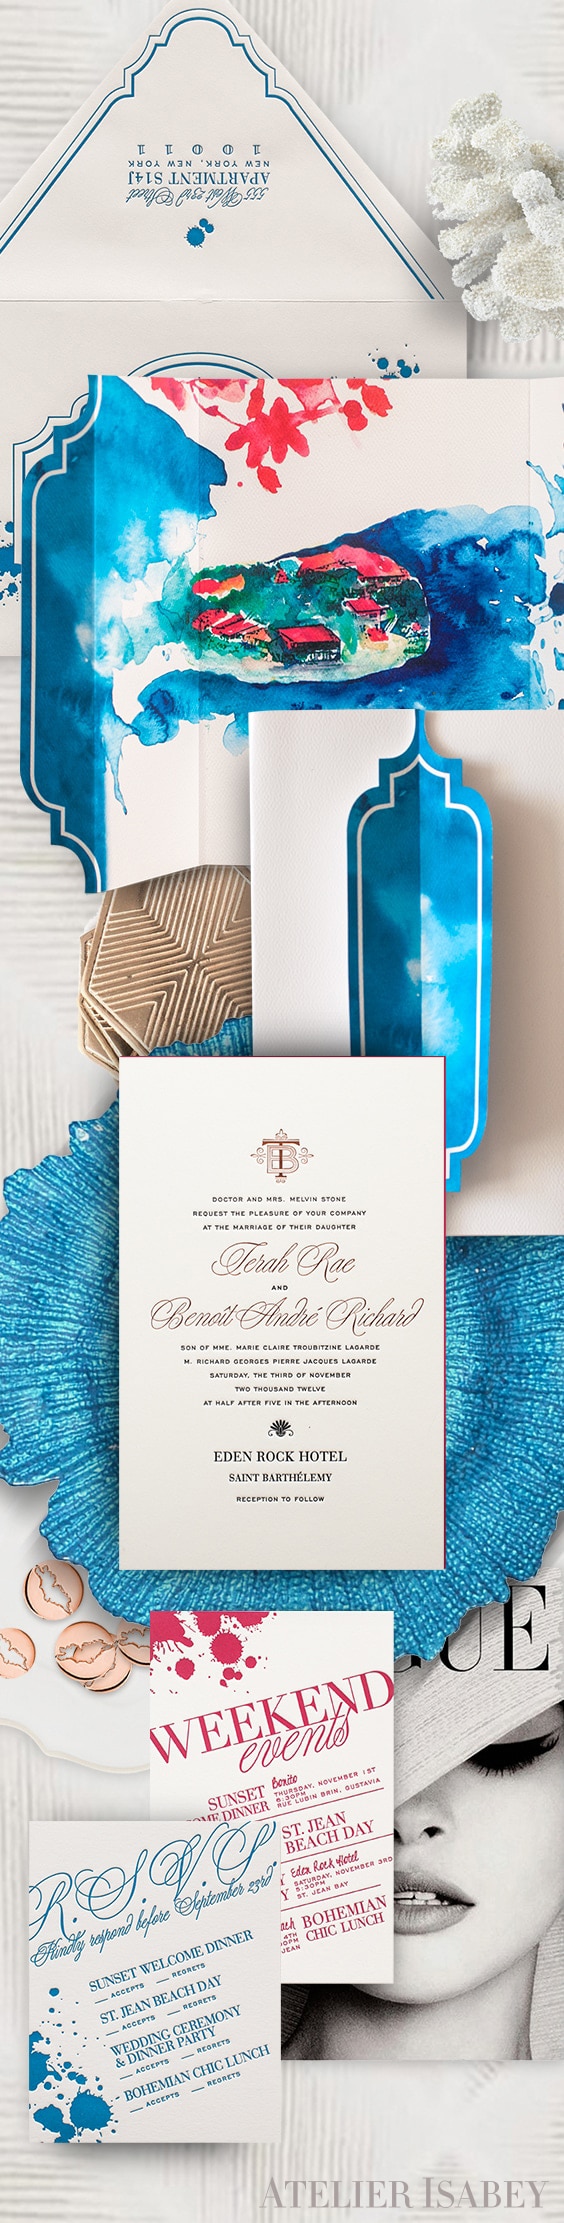 Eden Rock Saint Barts watercolor wedding invitation | By Atelier Isabey